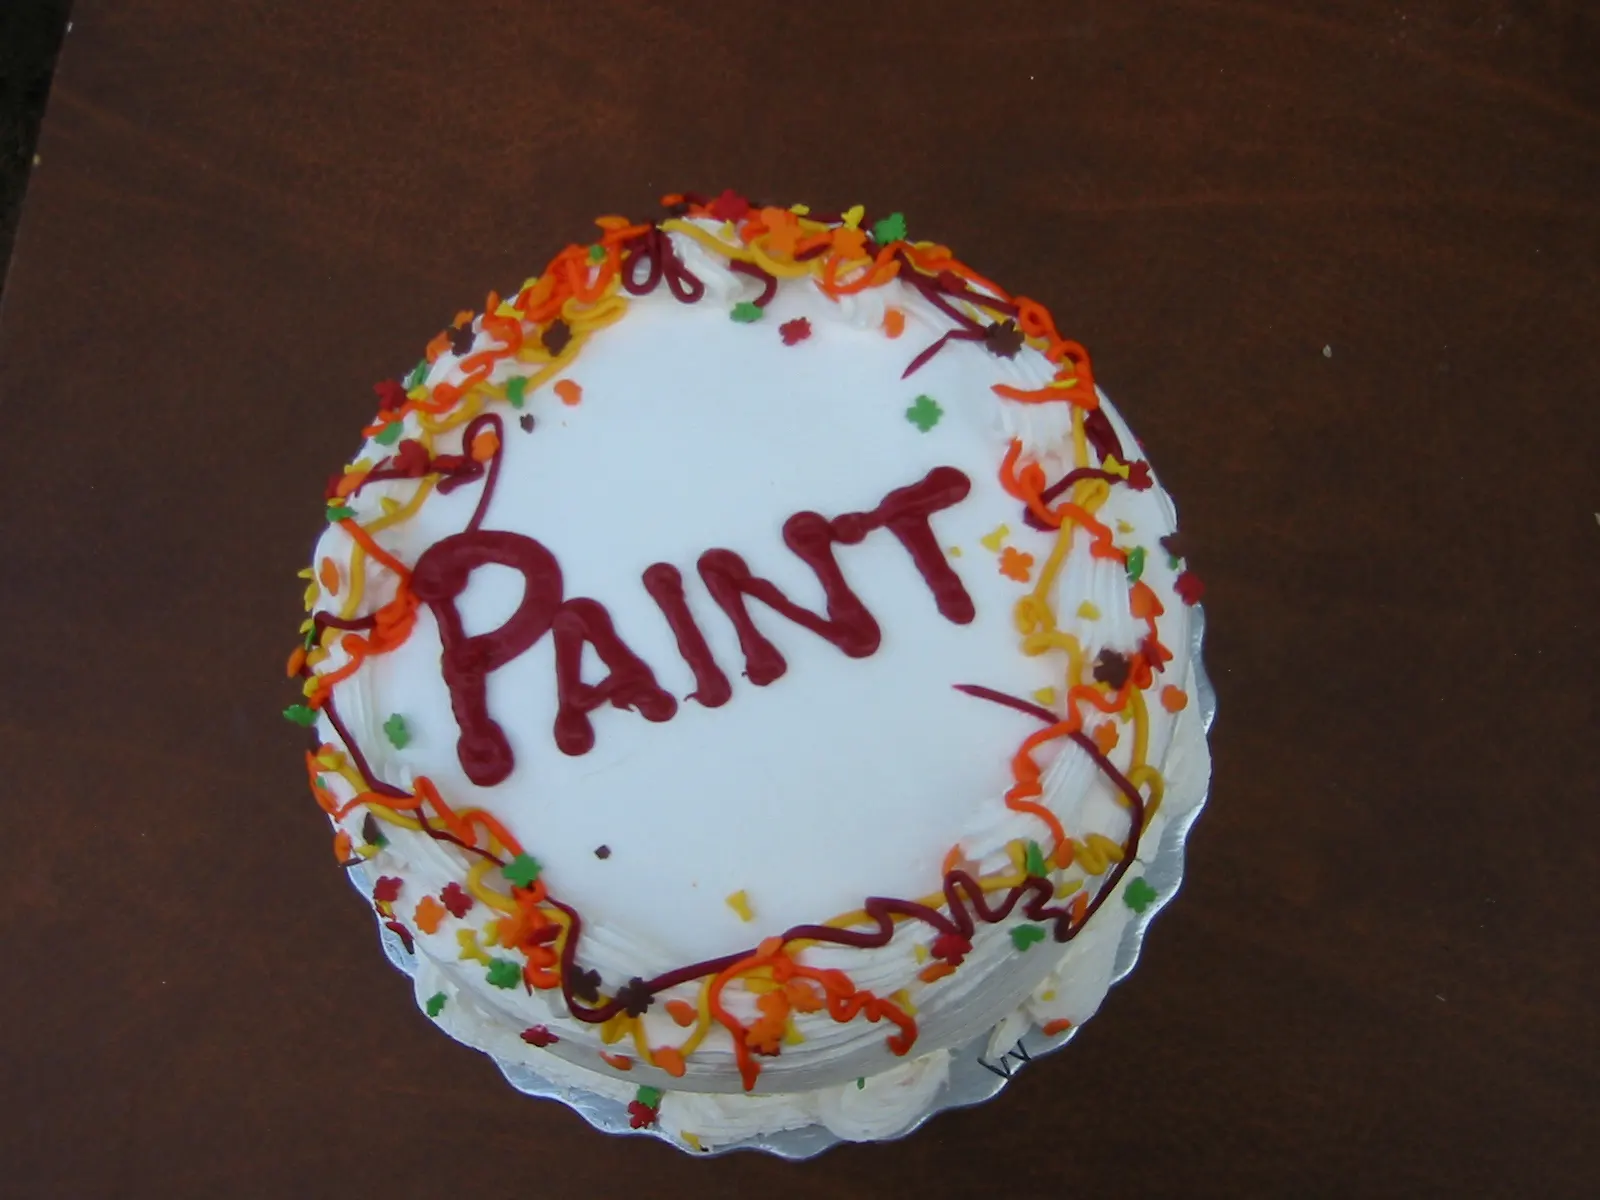 Paint 2006 Wrap Party Cake.